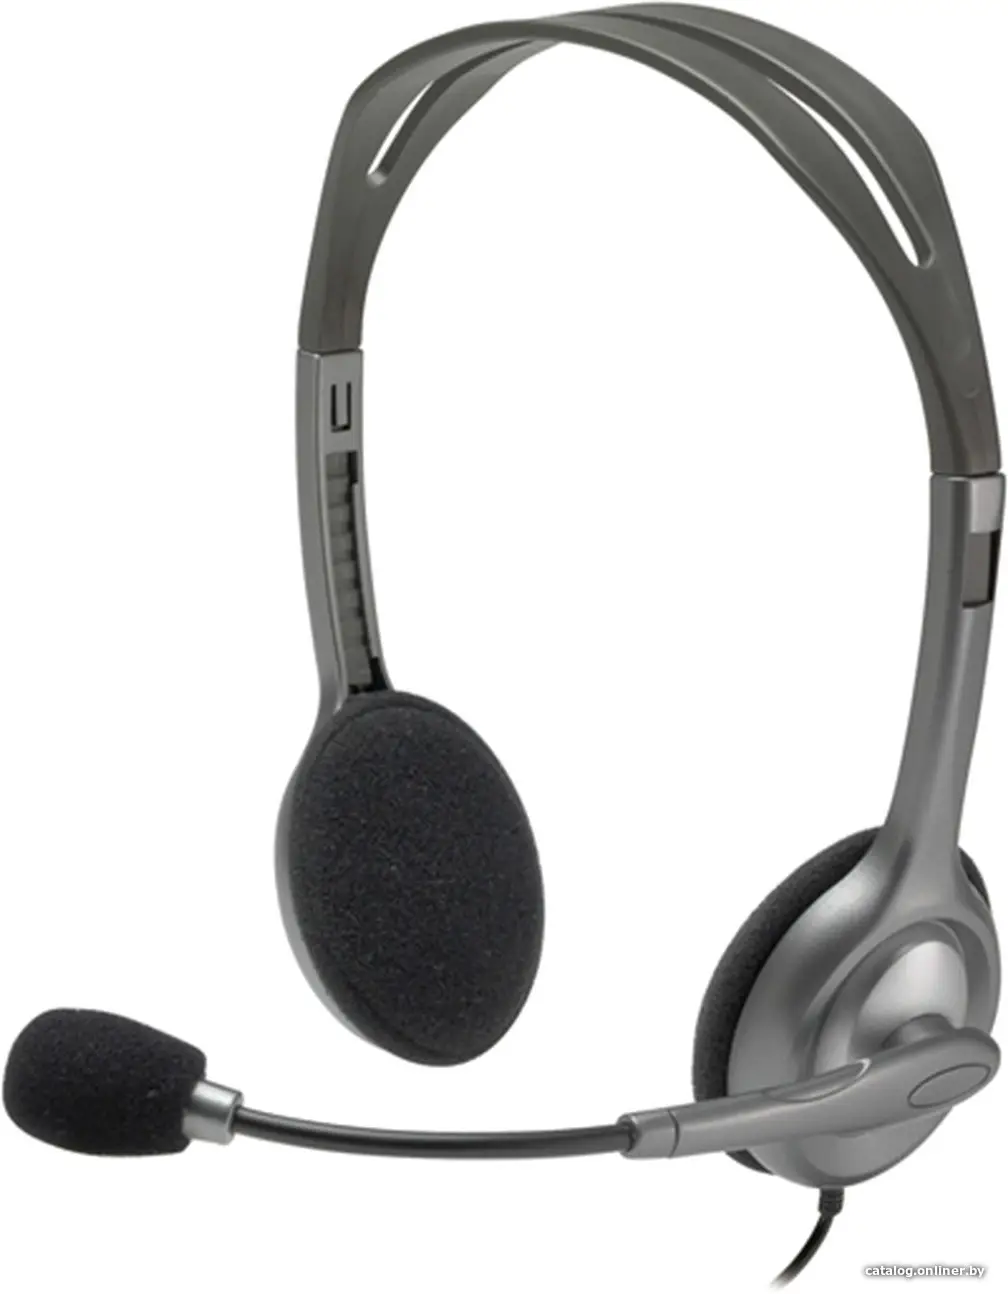 Купить Наушники с микрофоном Logitech Stereo Headset H111 Silver, цена, опт и розница